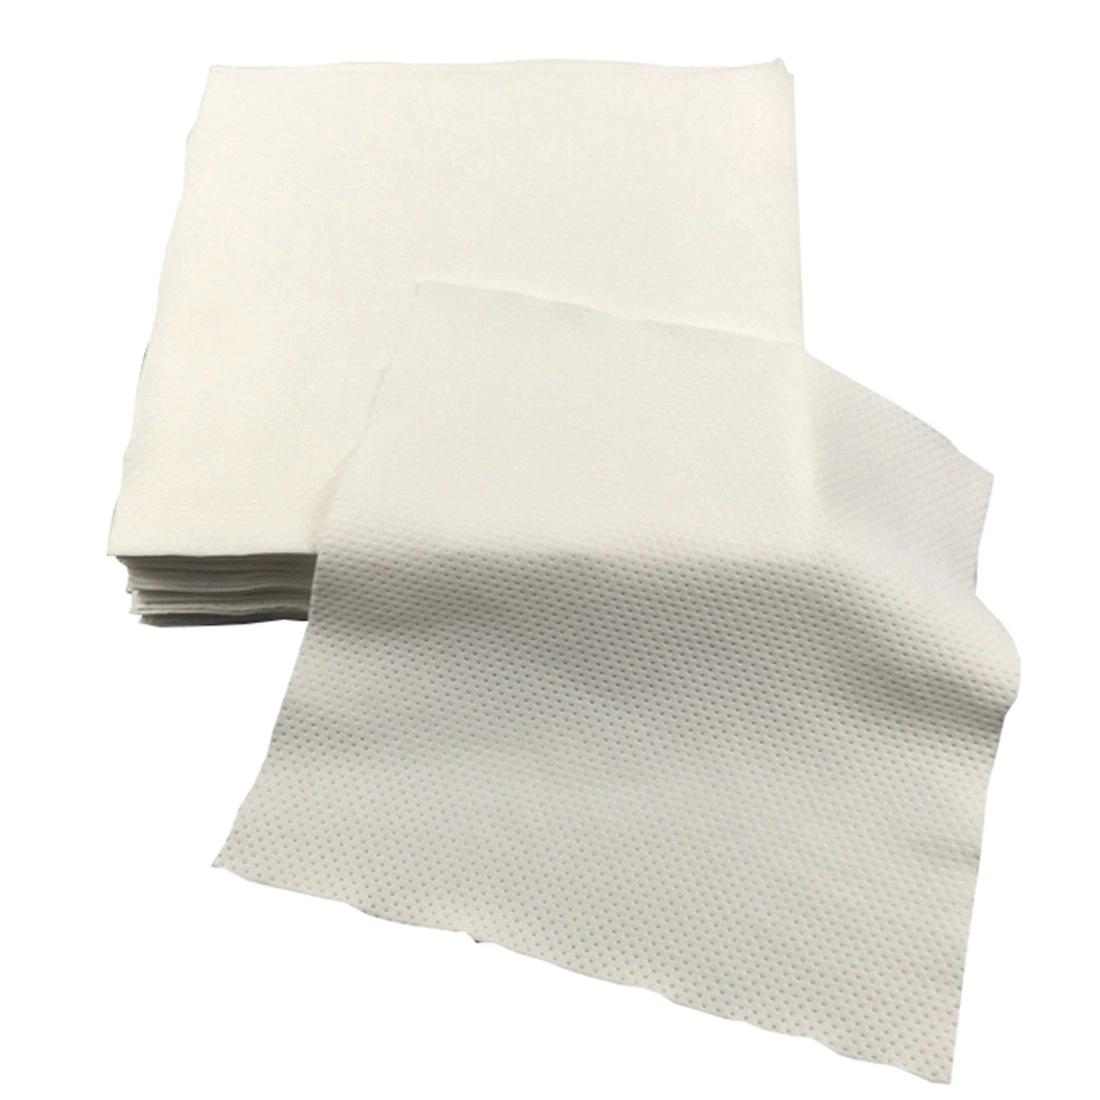 Super absorbente 240gsm sin pelusas 2ply toallitas para salas limpias farmacéuticas Limpiador de poliéster para salas limpias